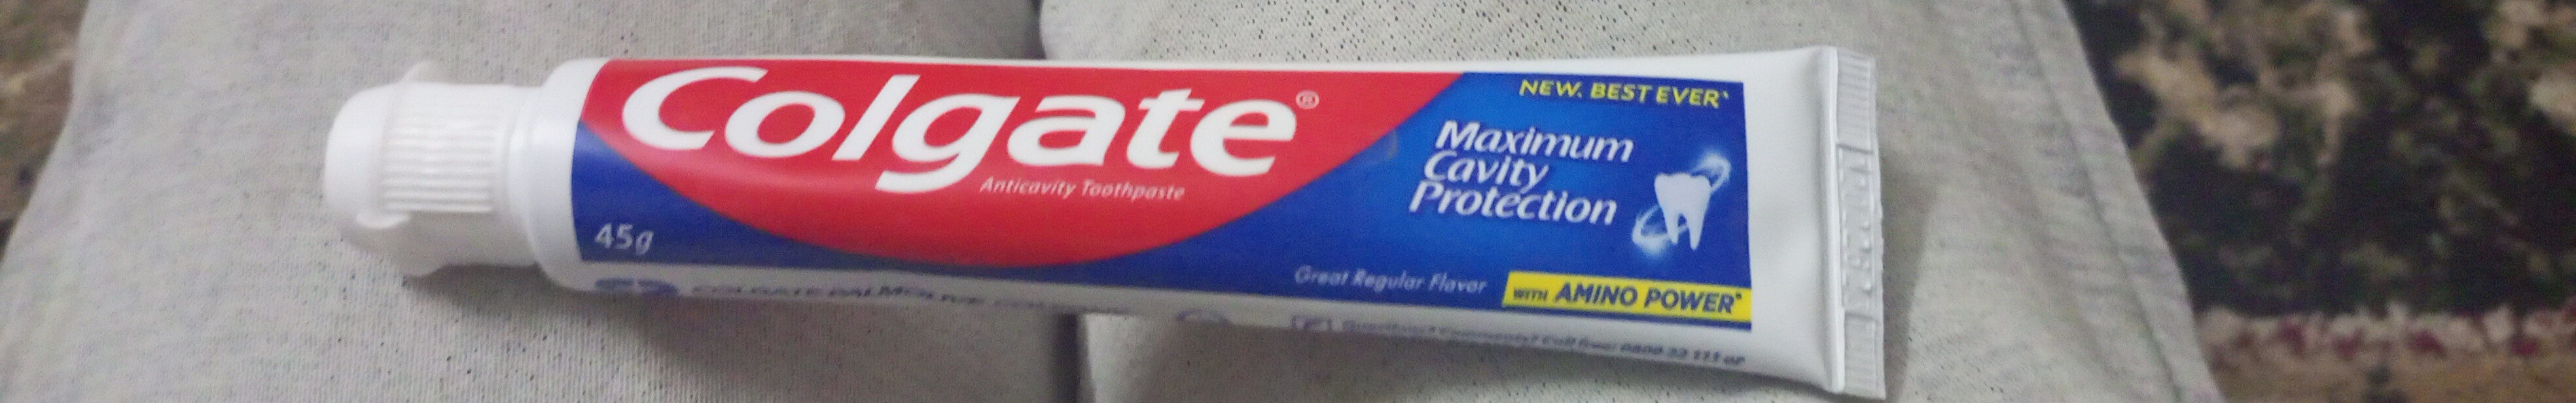 Colgate anticavity toothpaste - Produto - en